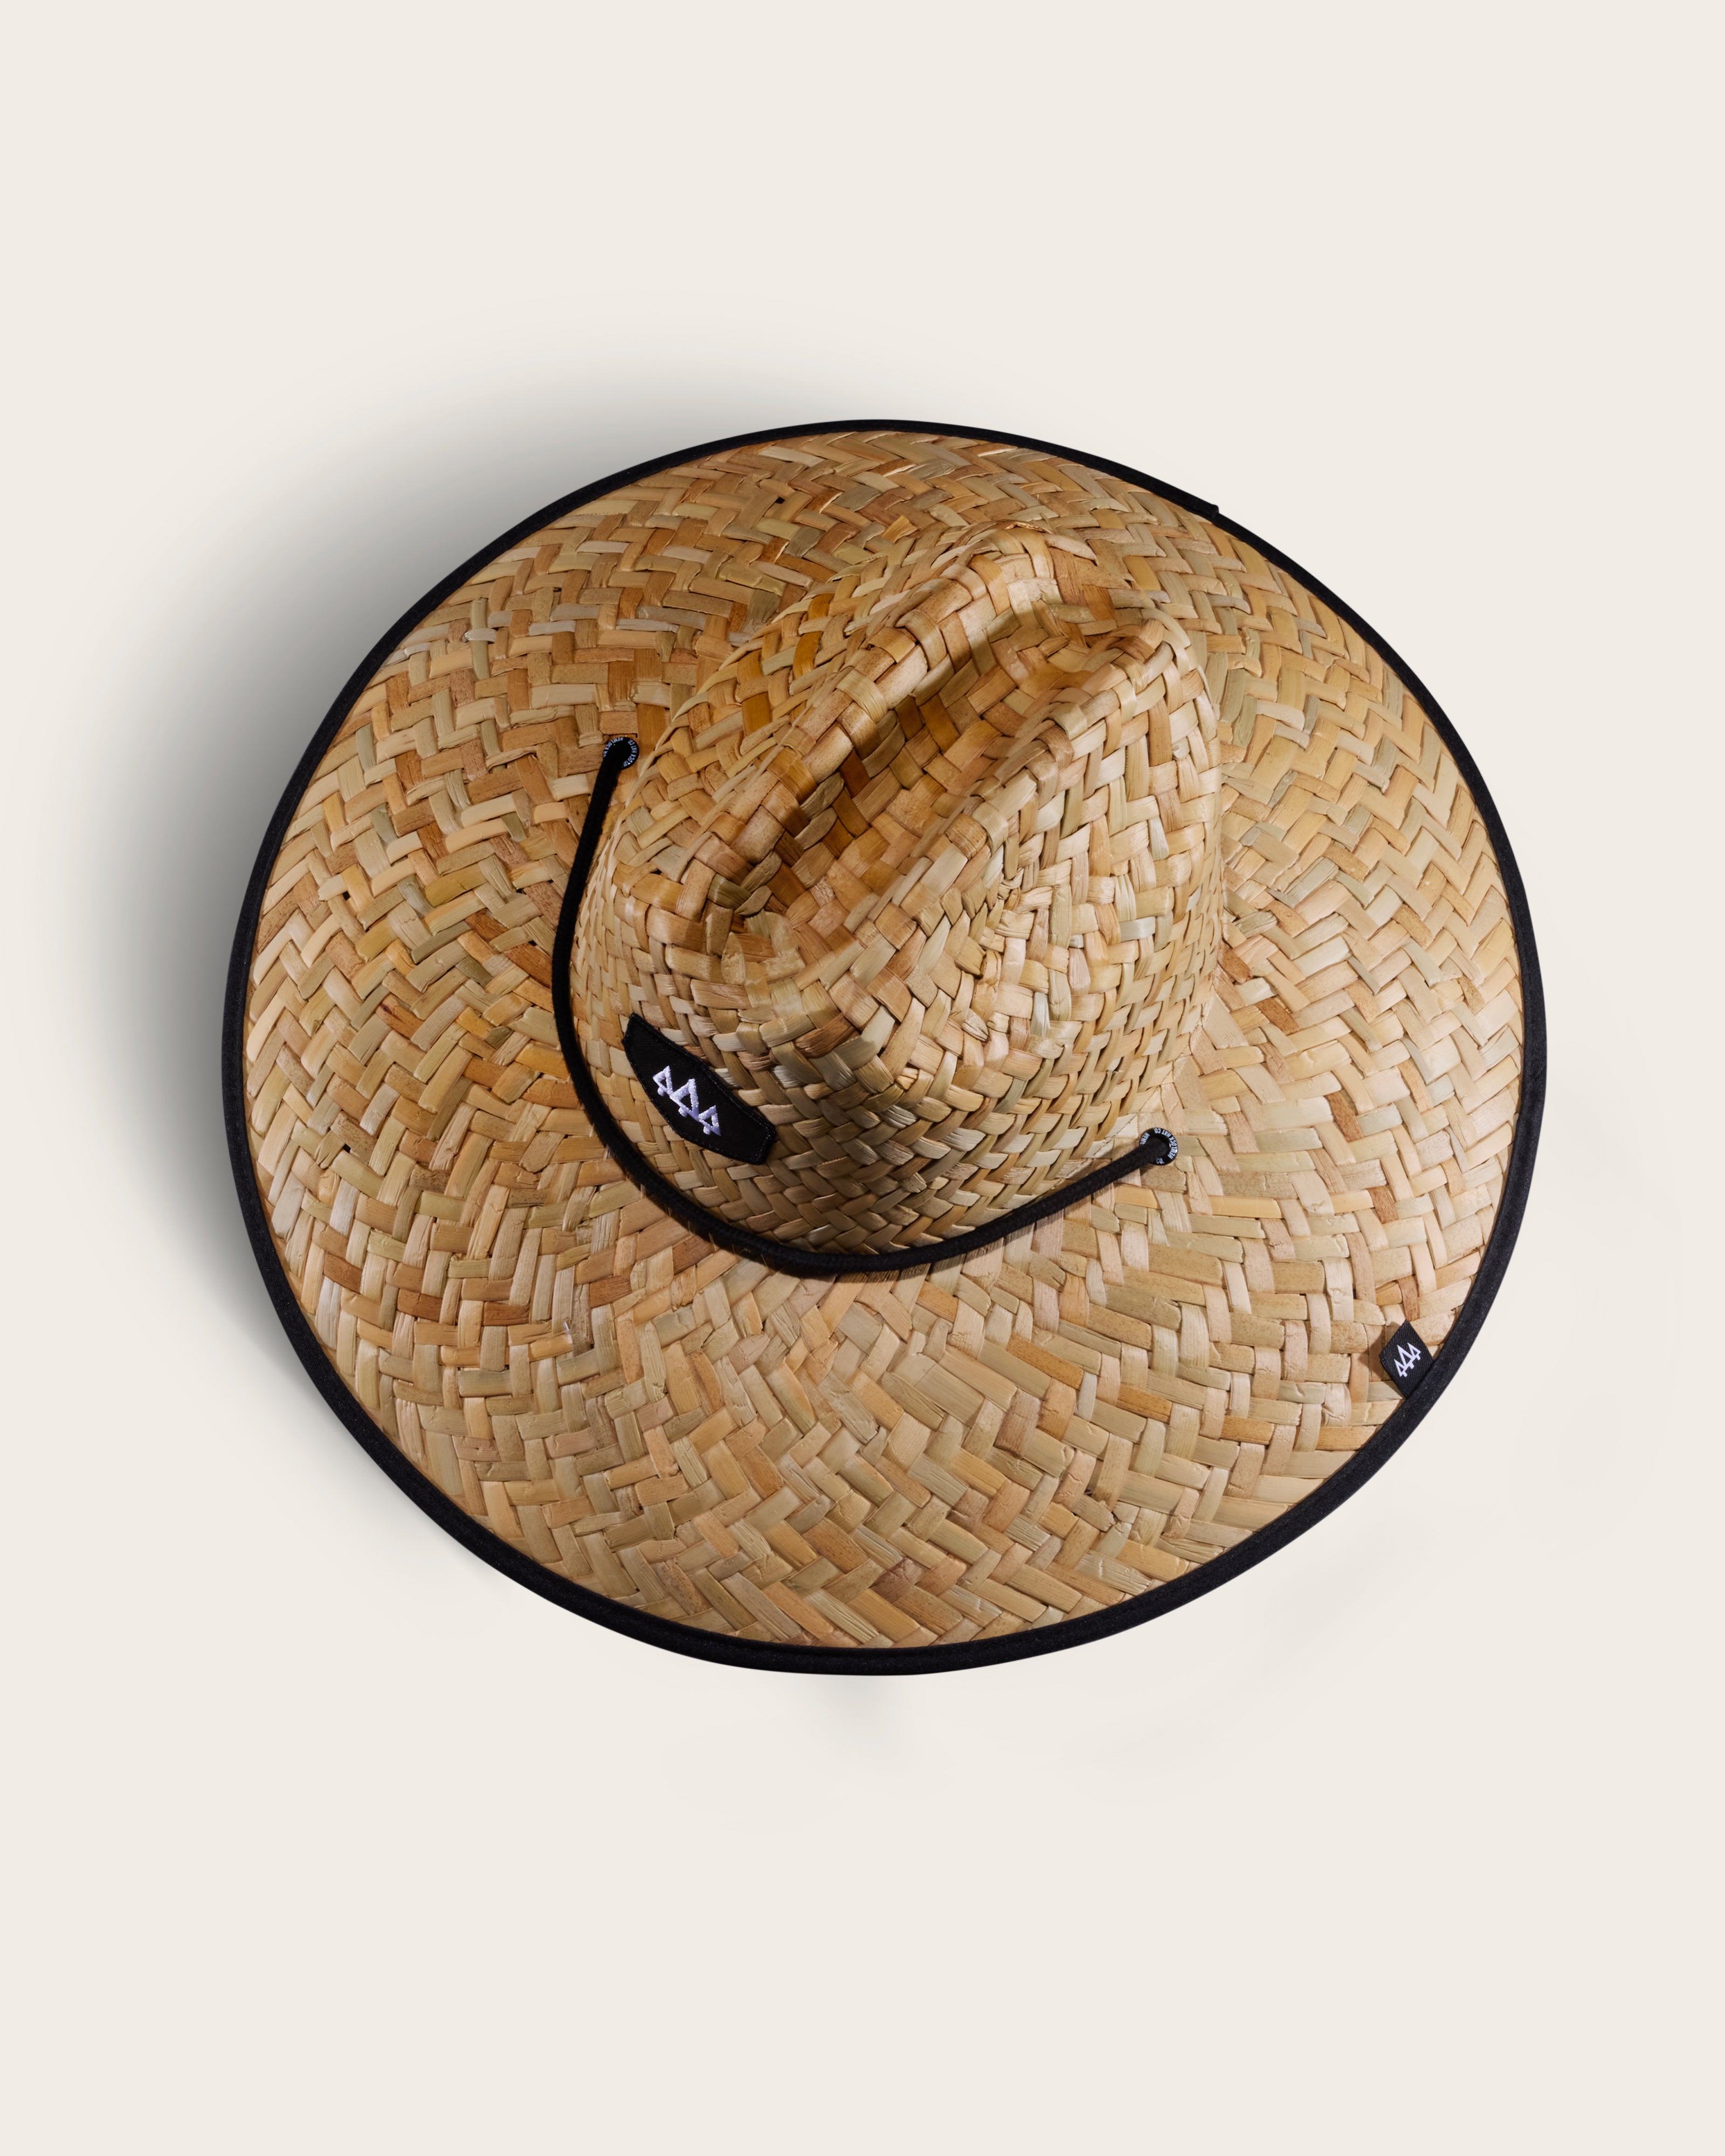 Blackout Straw Lifeguard Hat, Black Print Straw Hat UPF 50+